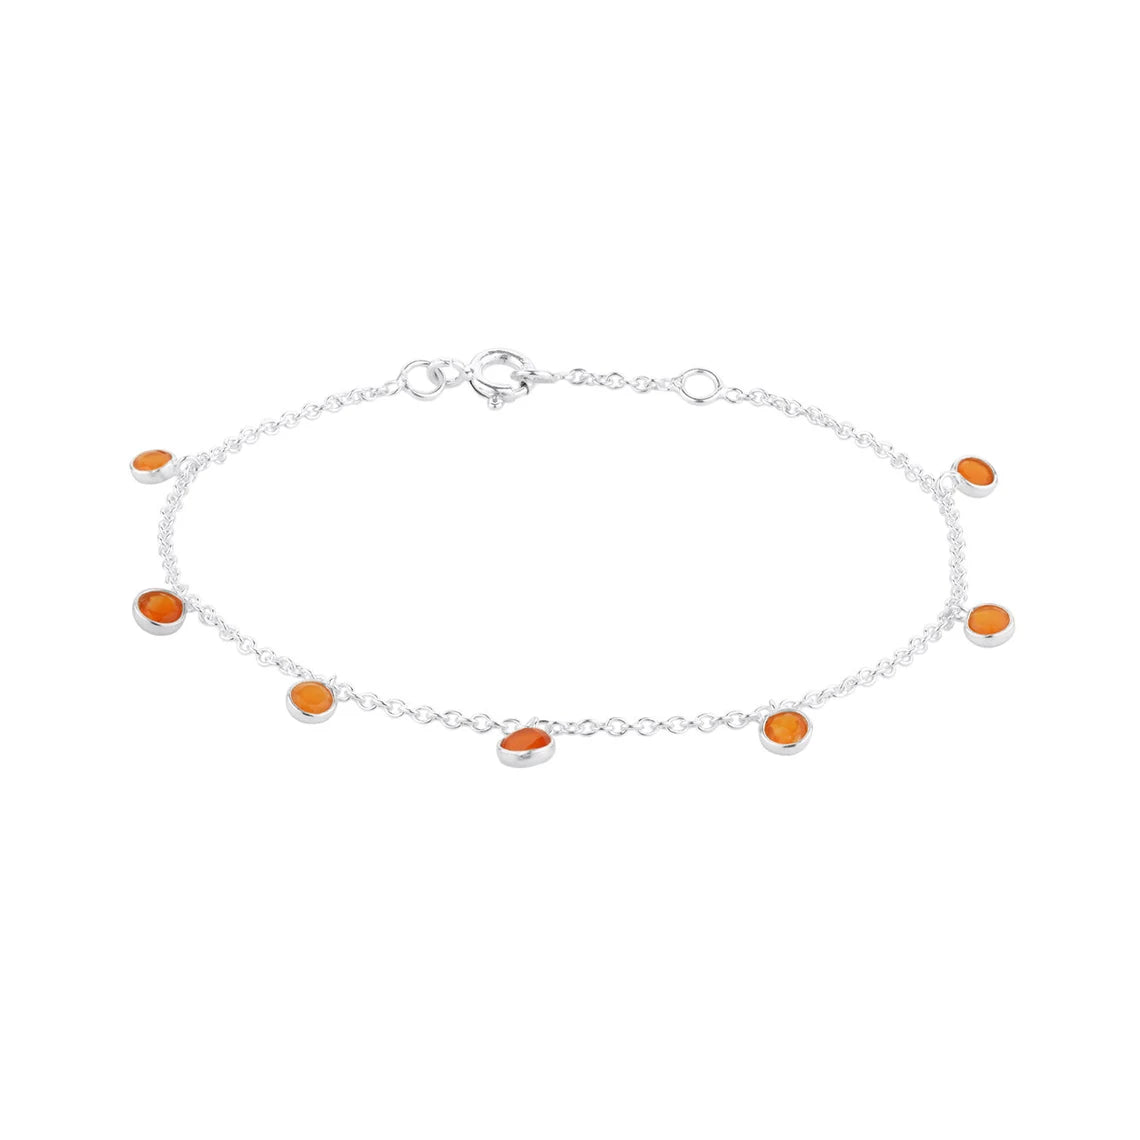 Carnelian Silver Bracelet, gemstone bracelet, sterling bracelet, Tiny bracelet, round gemstone, round cut bracelet, simple bracelet Handmade